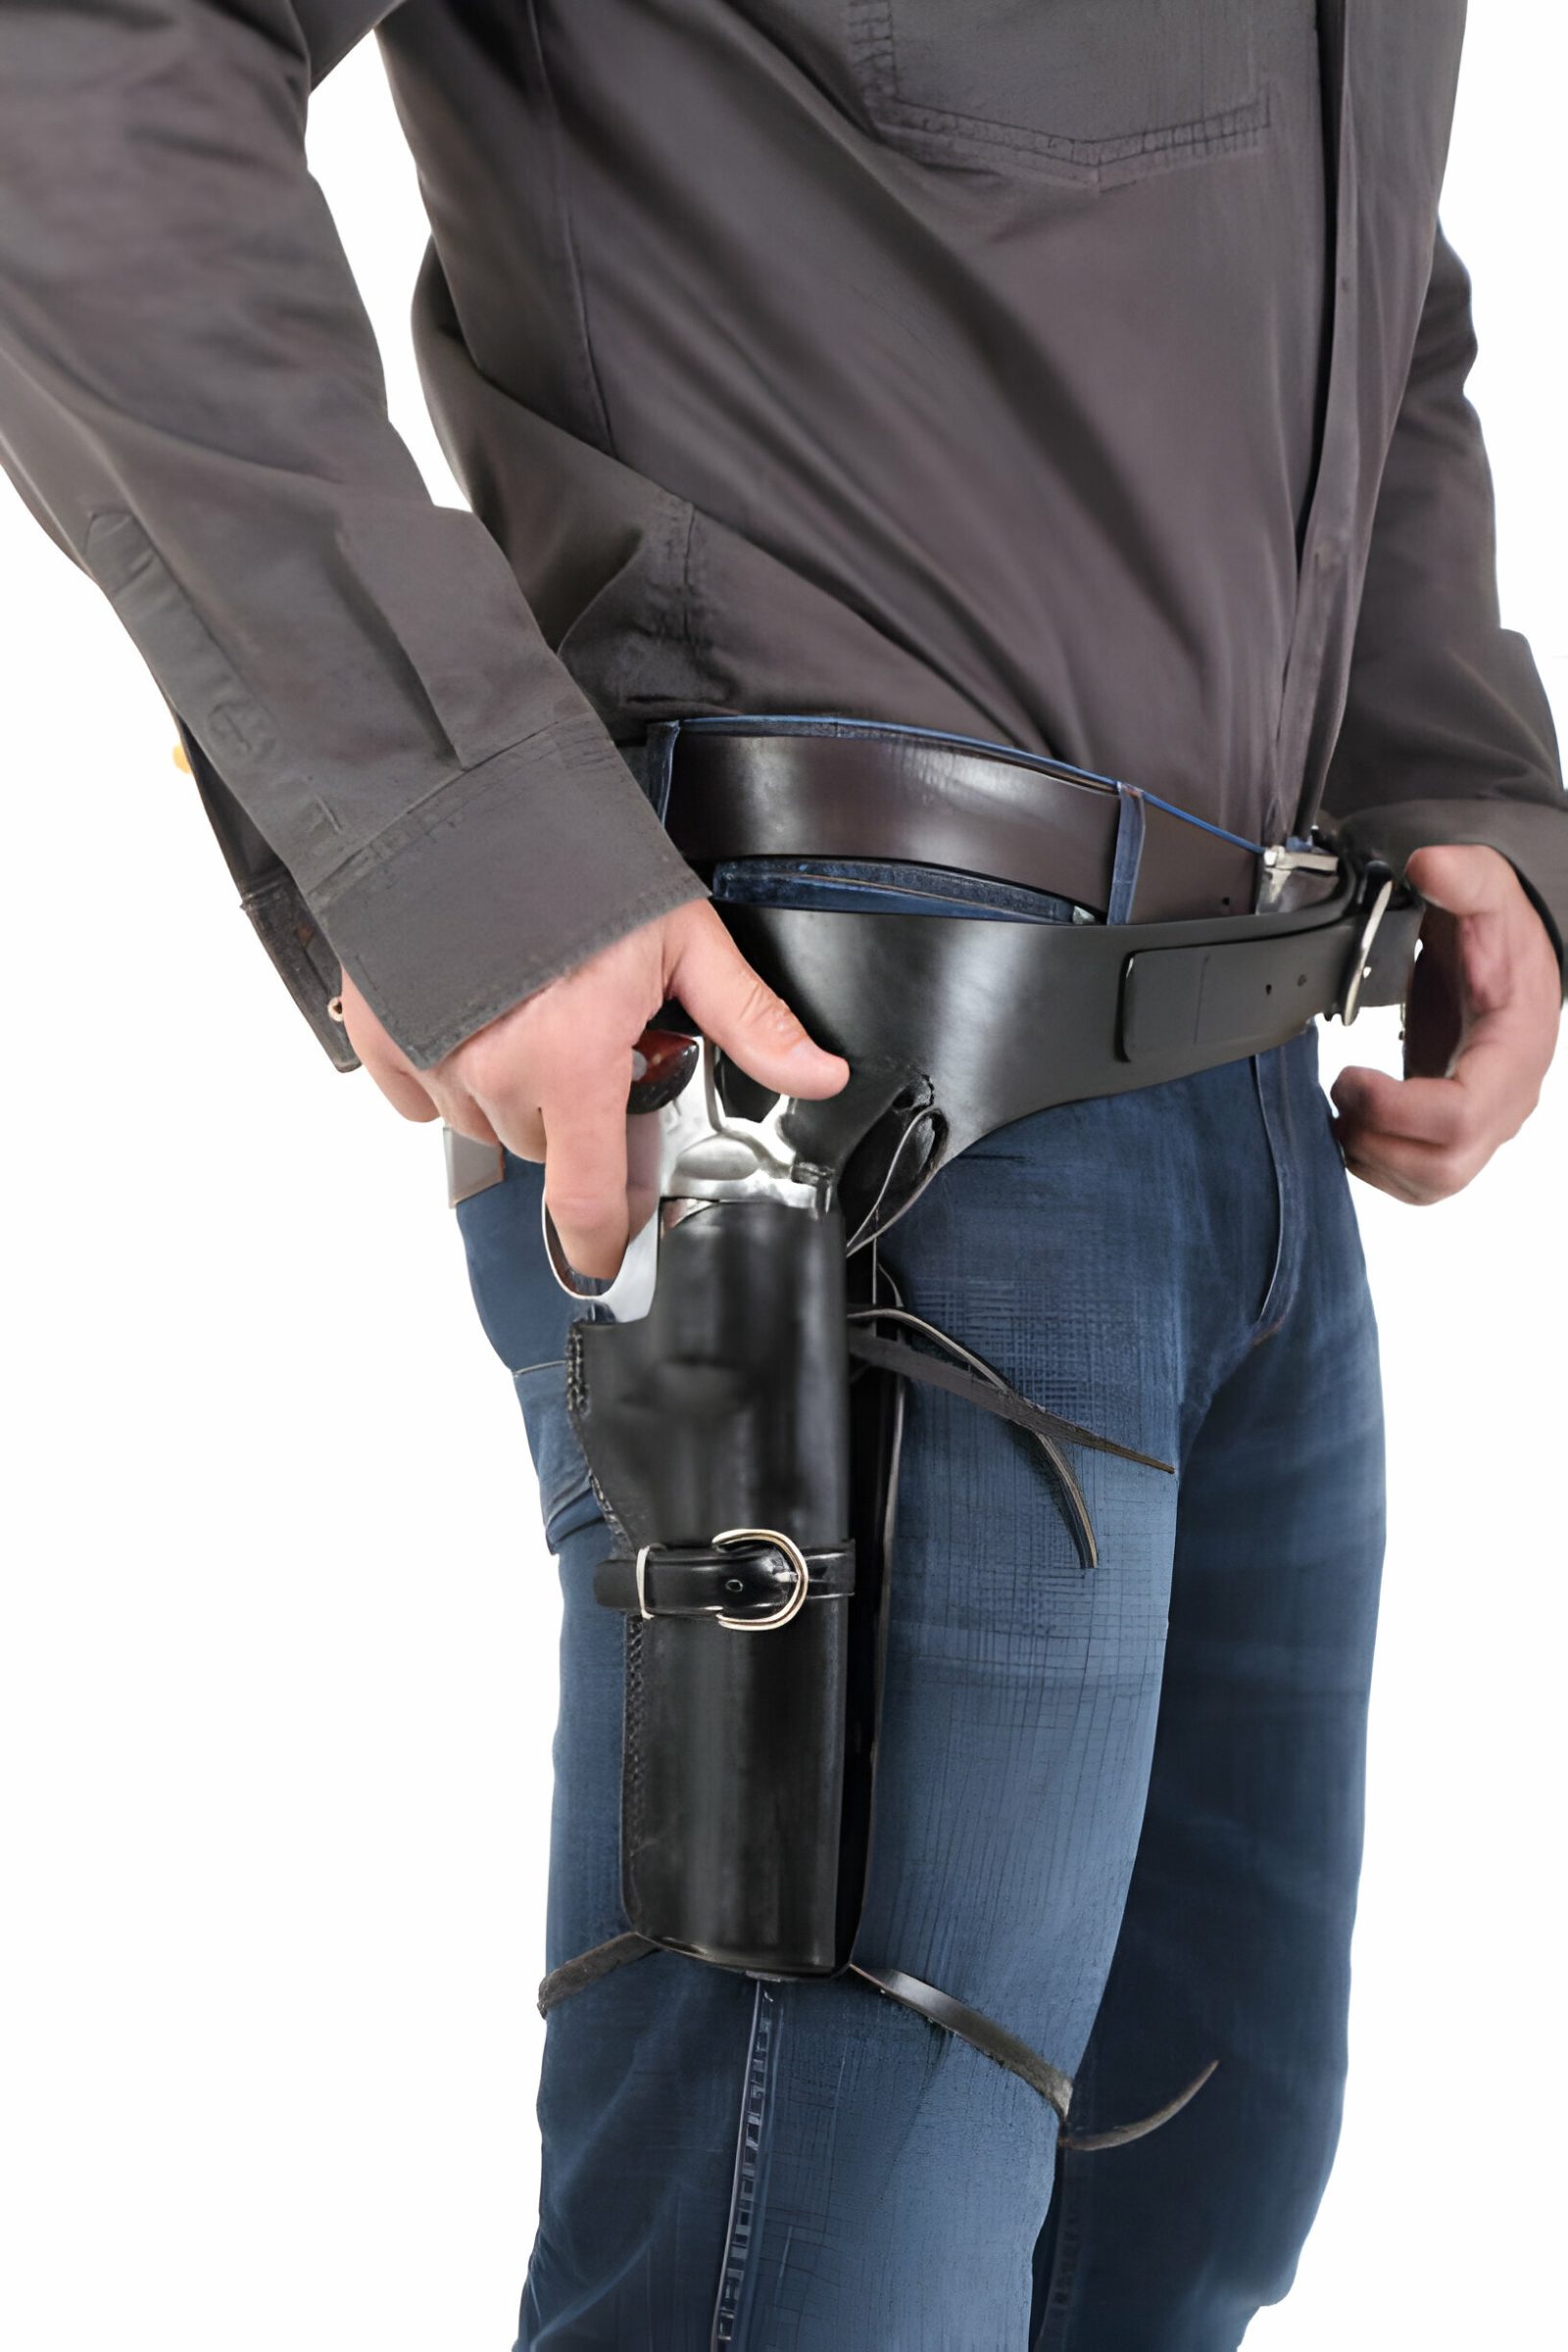 costume gun thigh holster